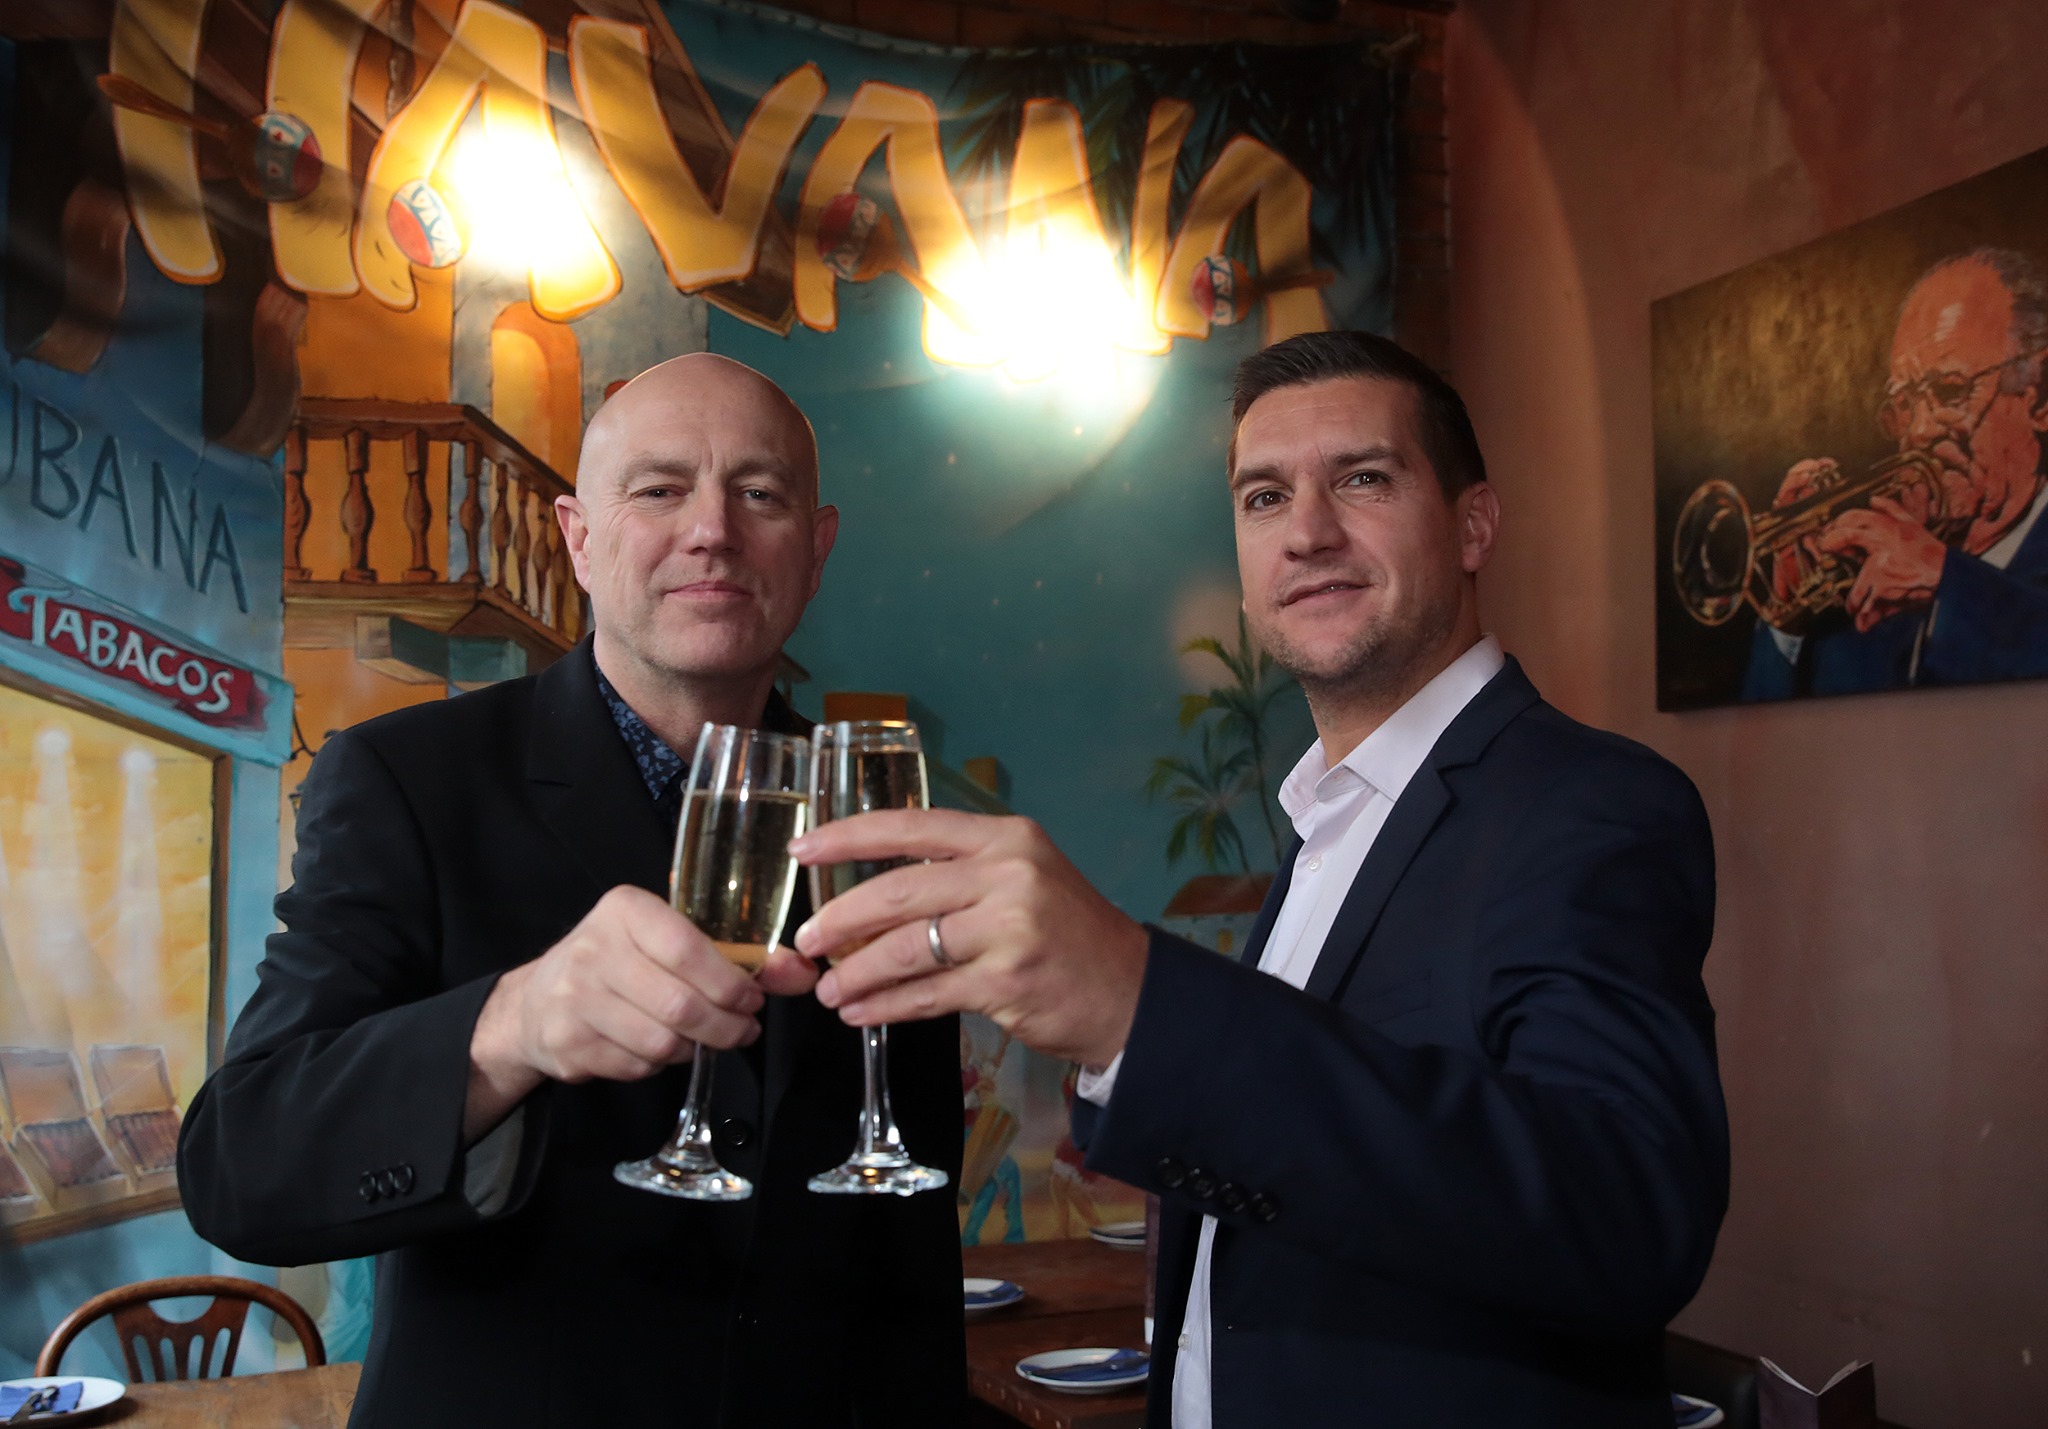 Cubana owners Brad Charlesworth and Adrian Bagnoli celebratring 20 years of Cubana 